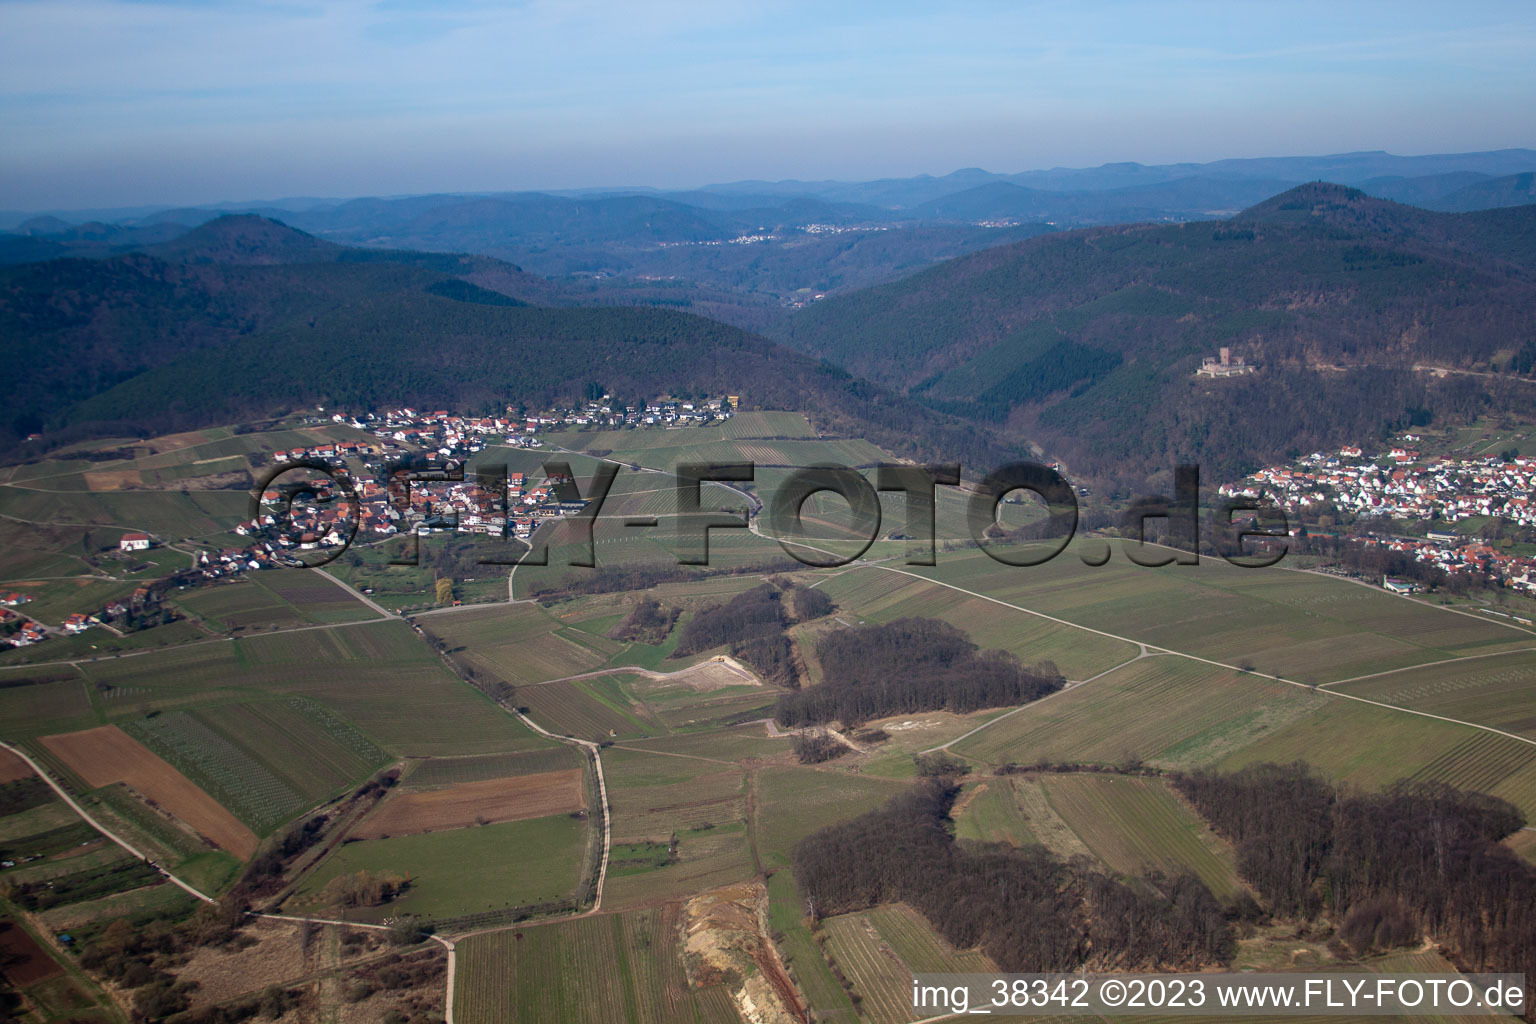 Oblique view of District Gleiszellen in Gleiszellen-Gleishorbach in the state Rhineland-Palatinate, Germany